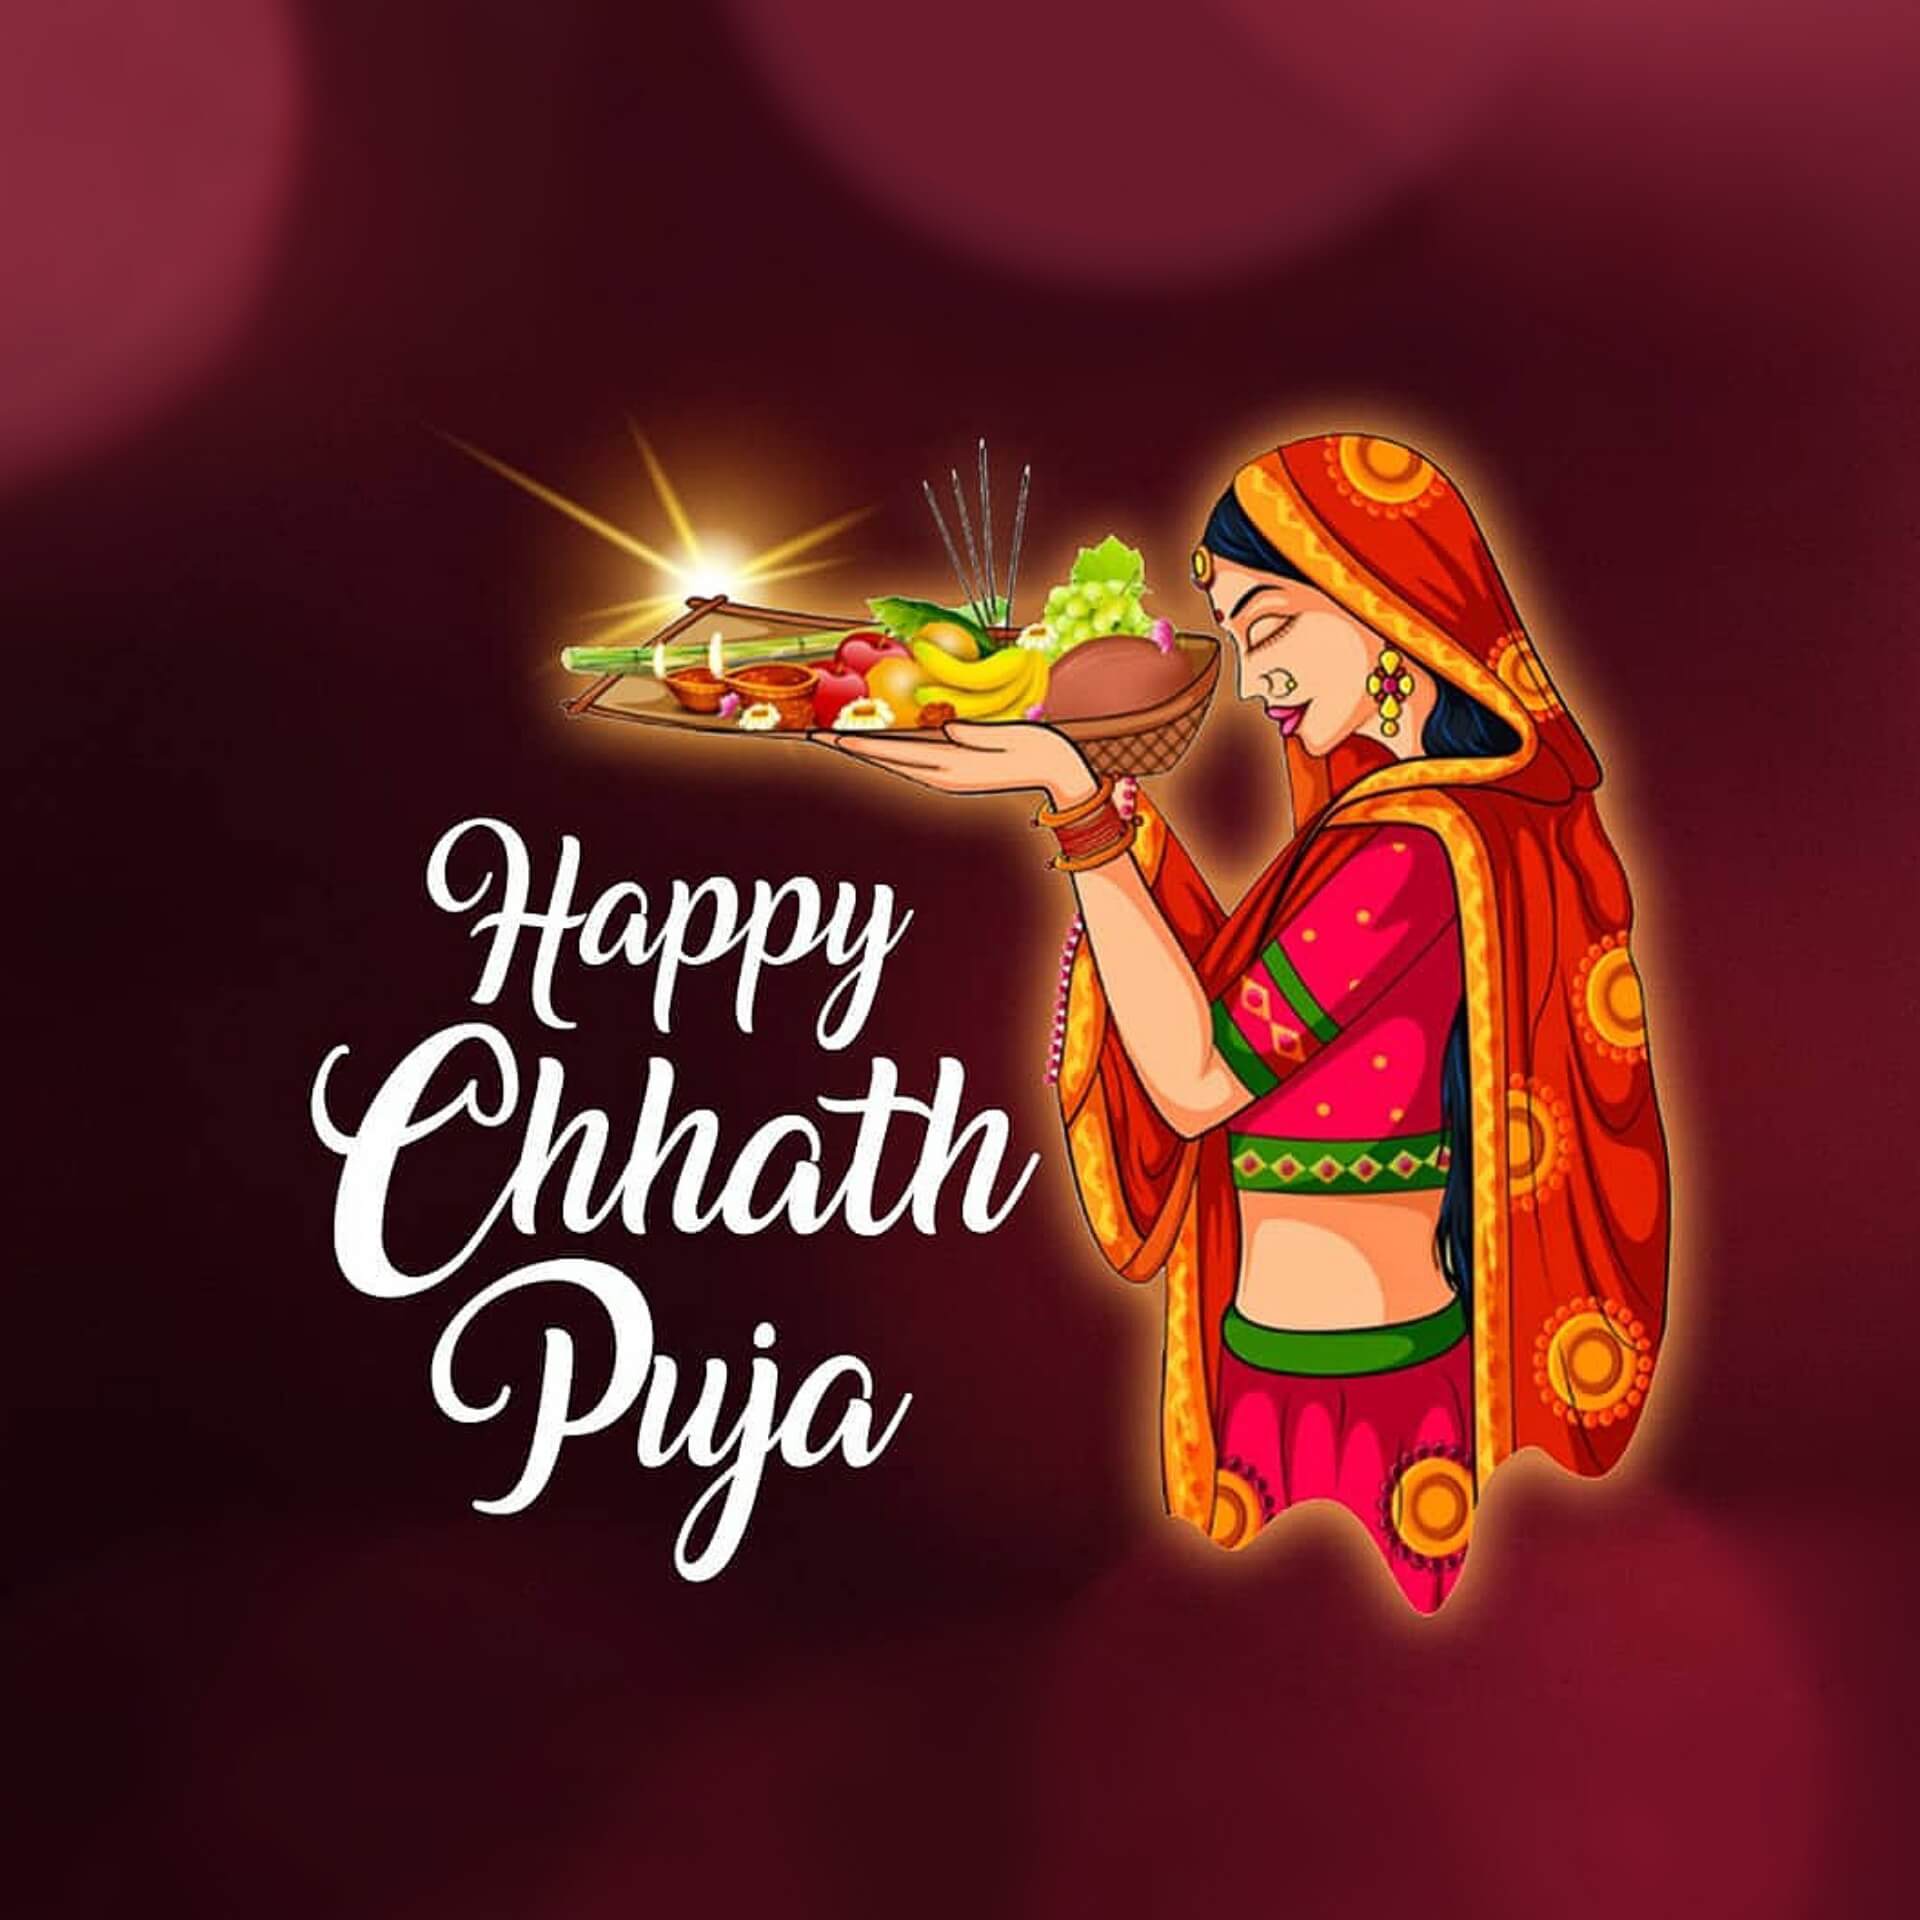 Happy Chhath Puja Image